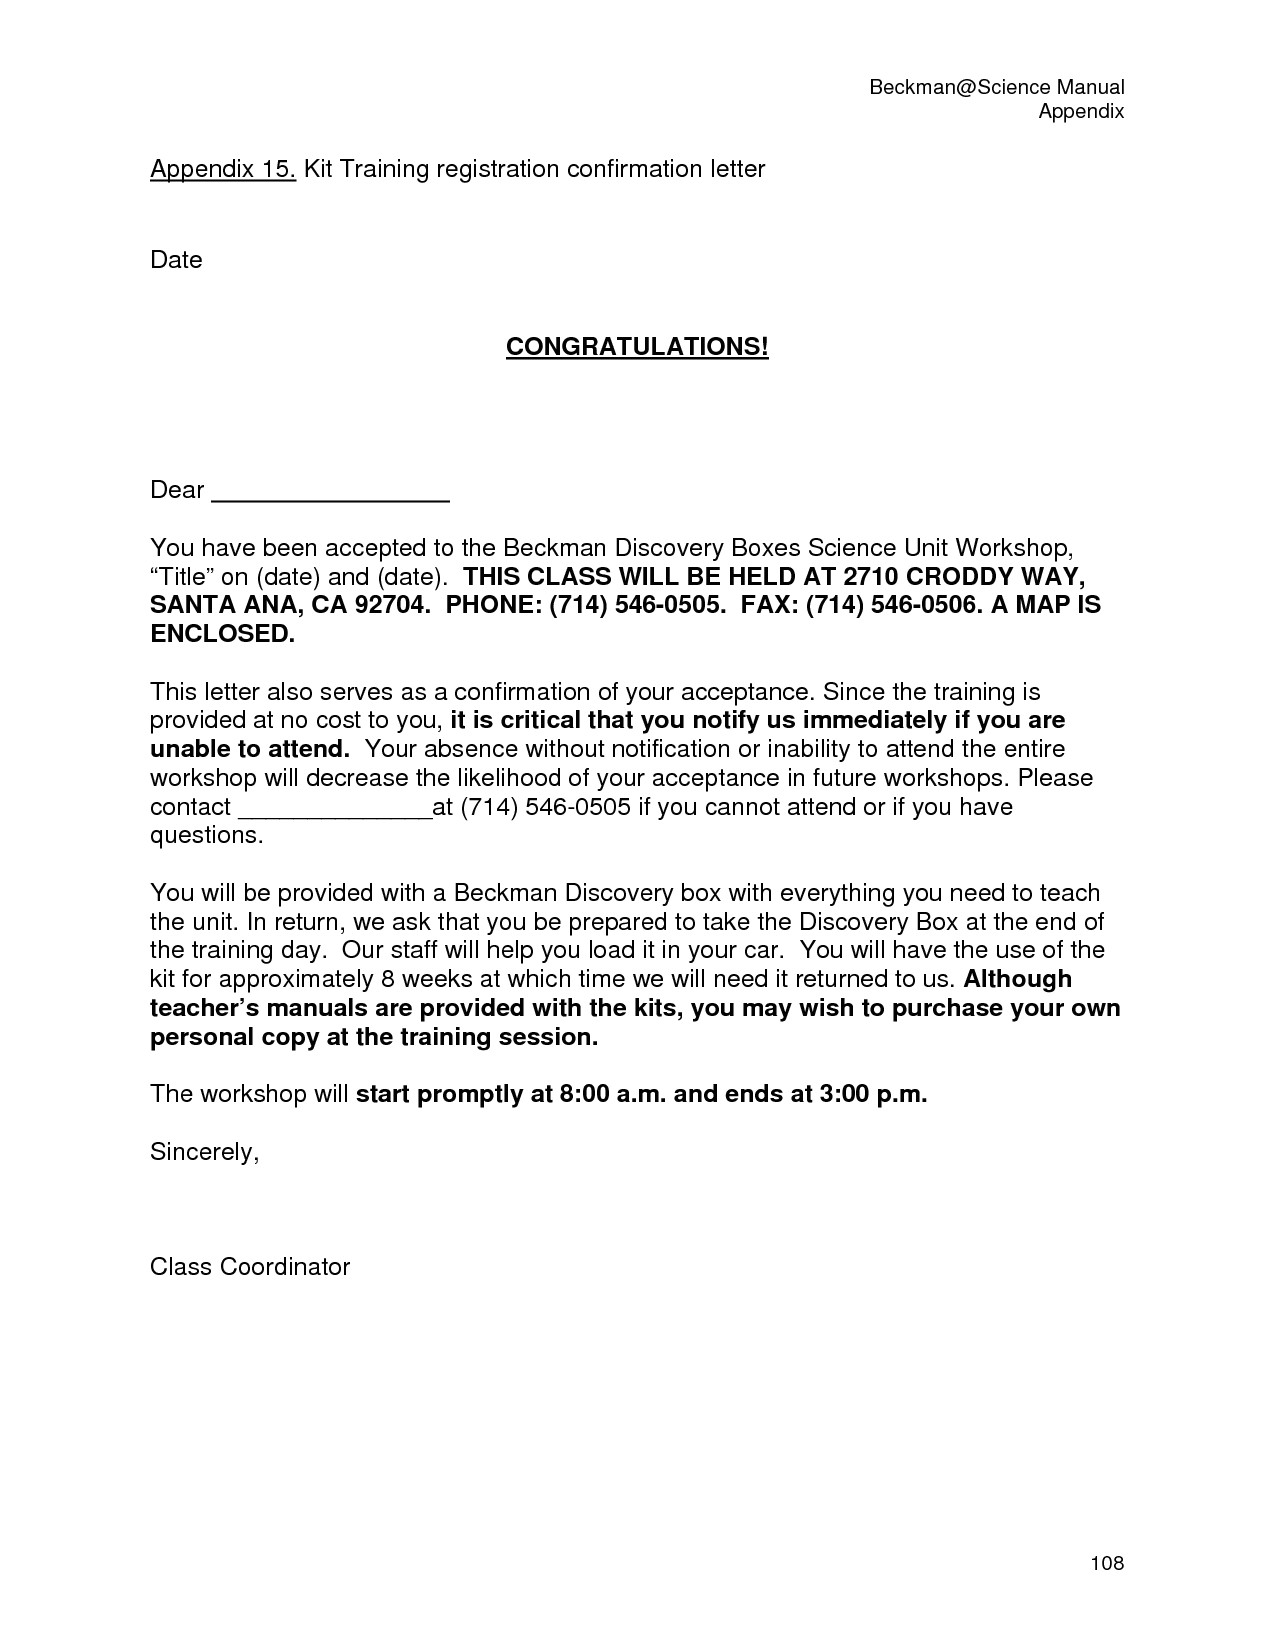 print cover letter on resume paper